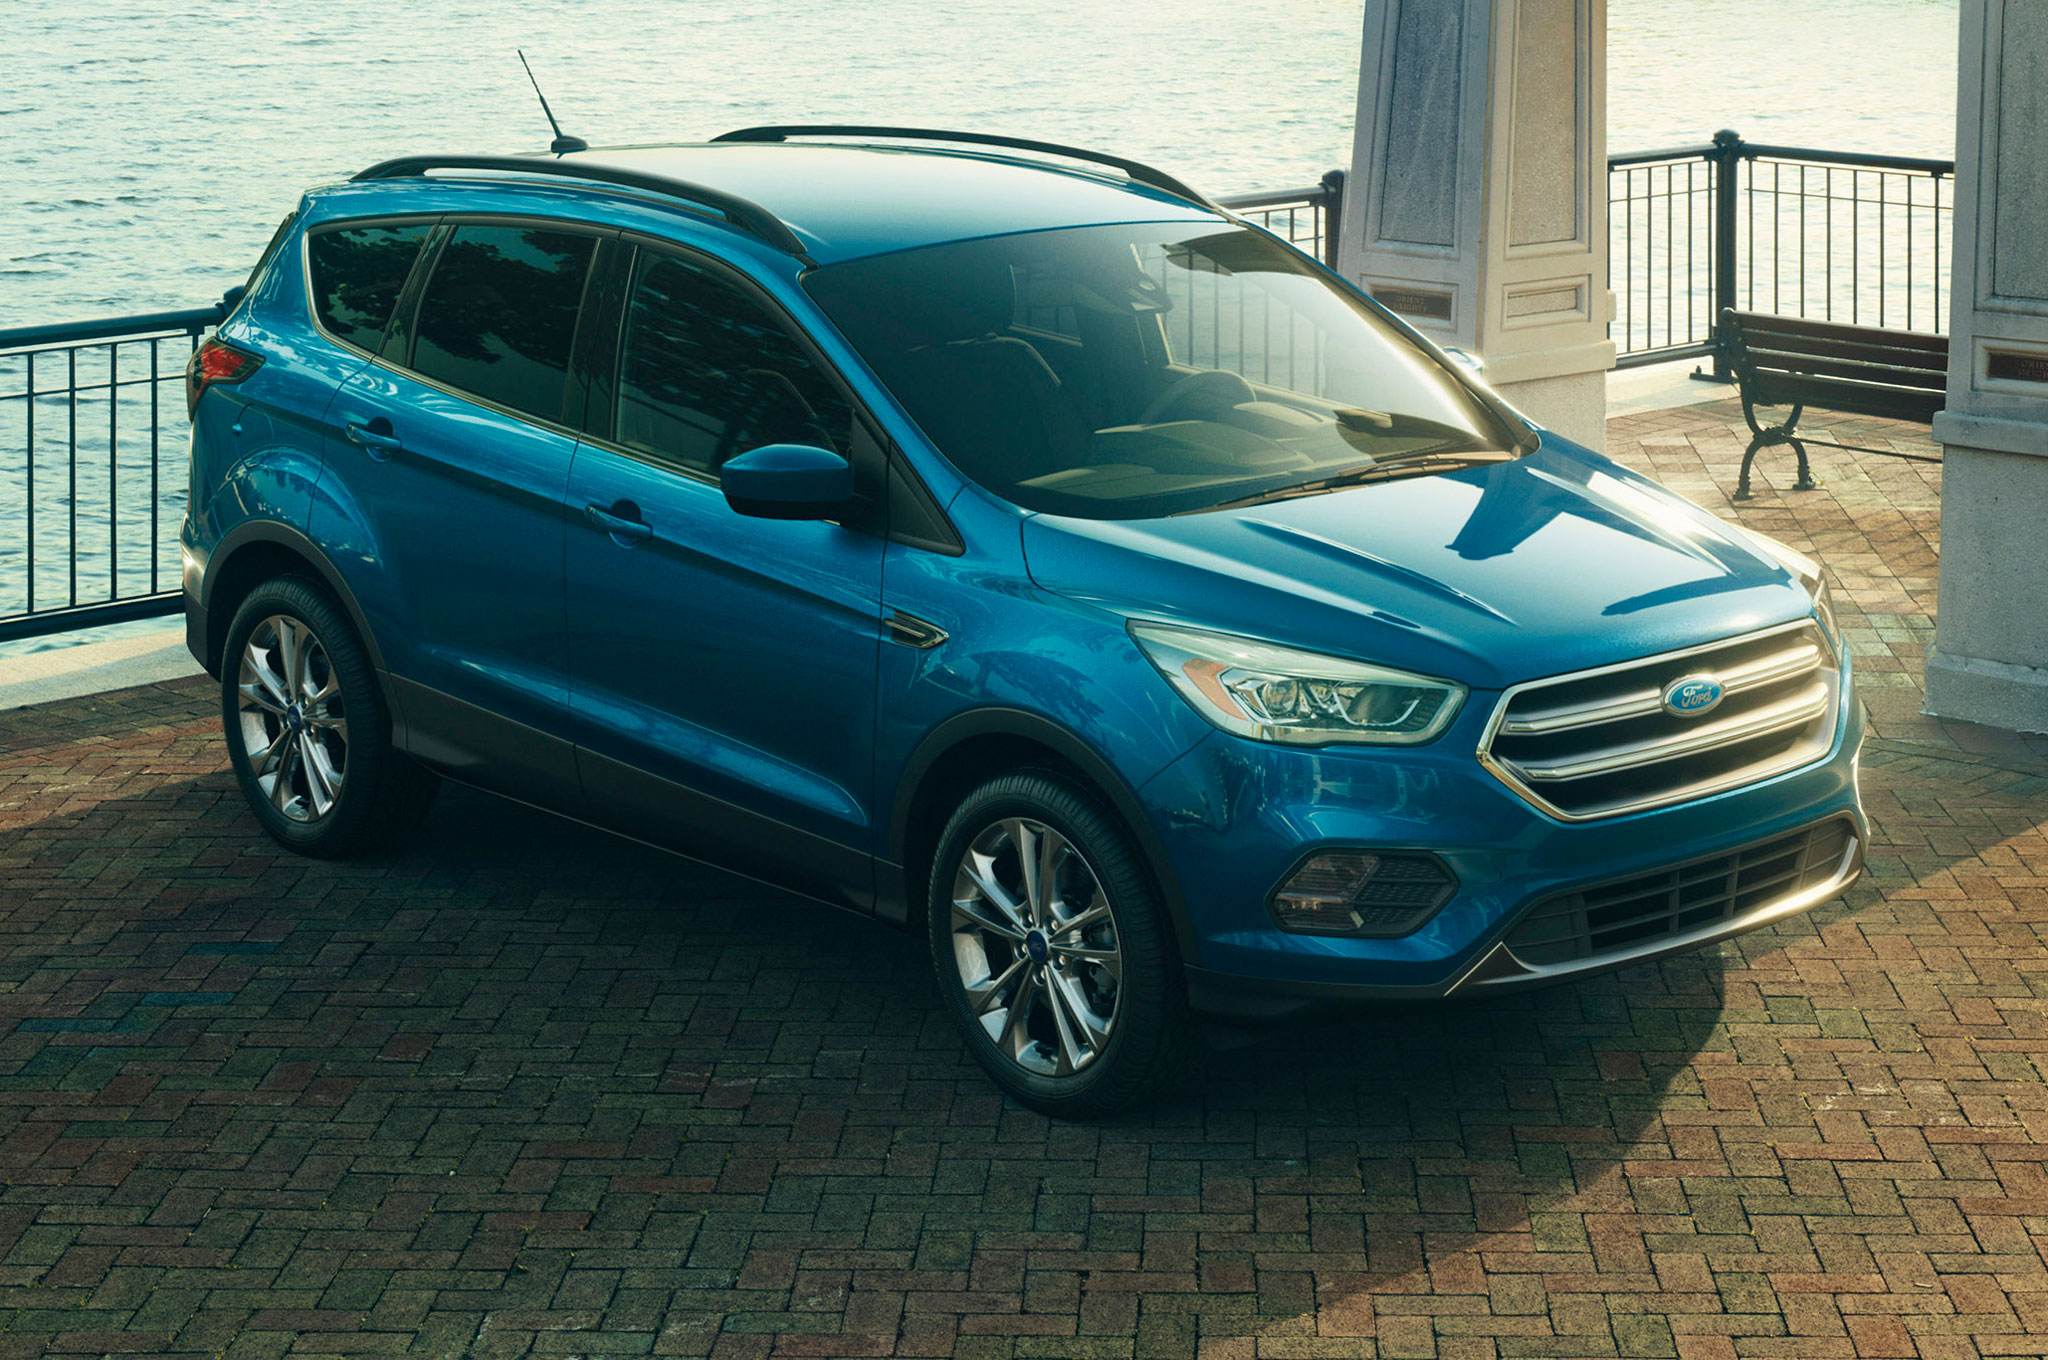 2017-Ford-Escape-Titanium-front-side-view-parked